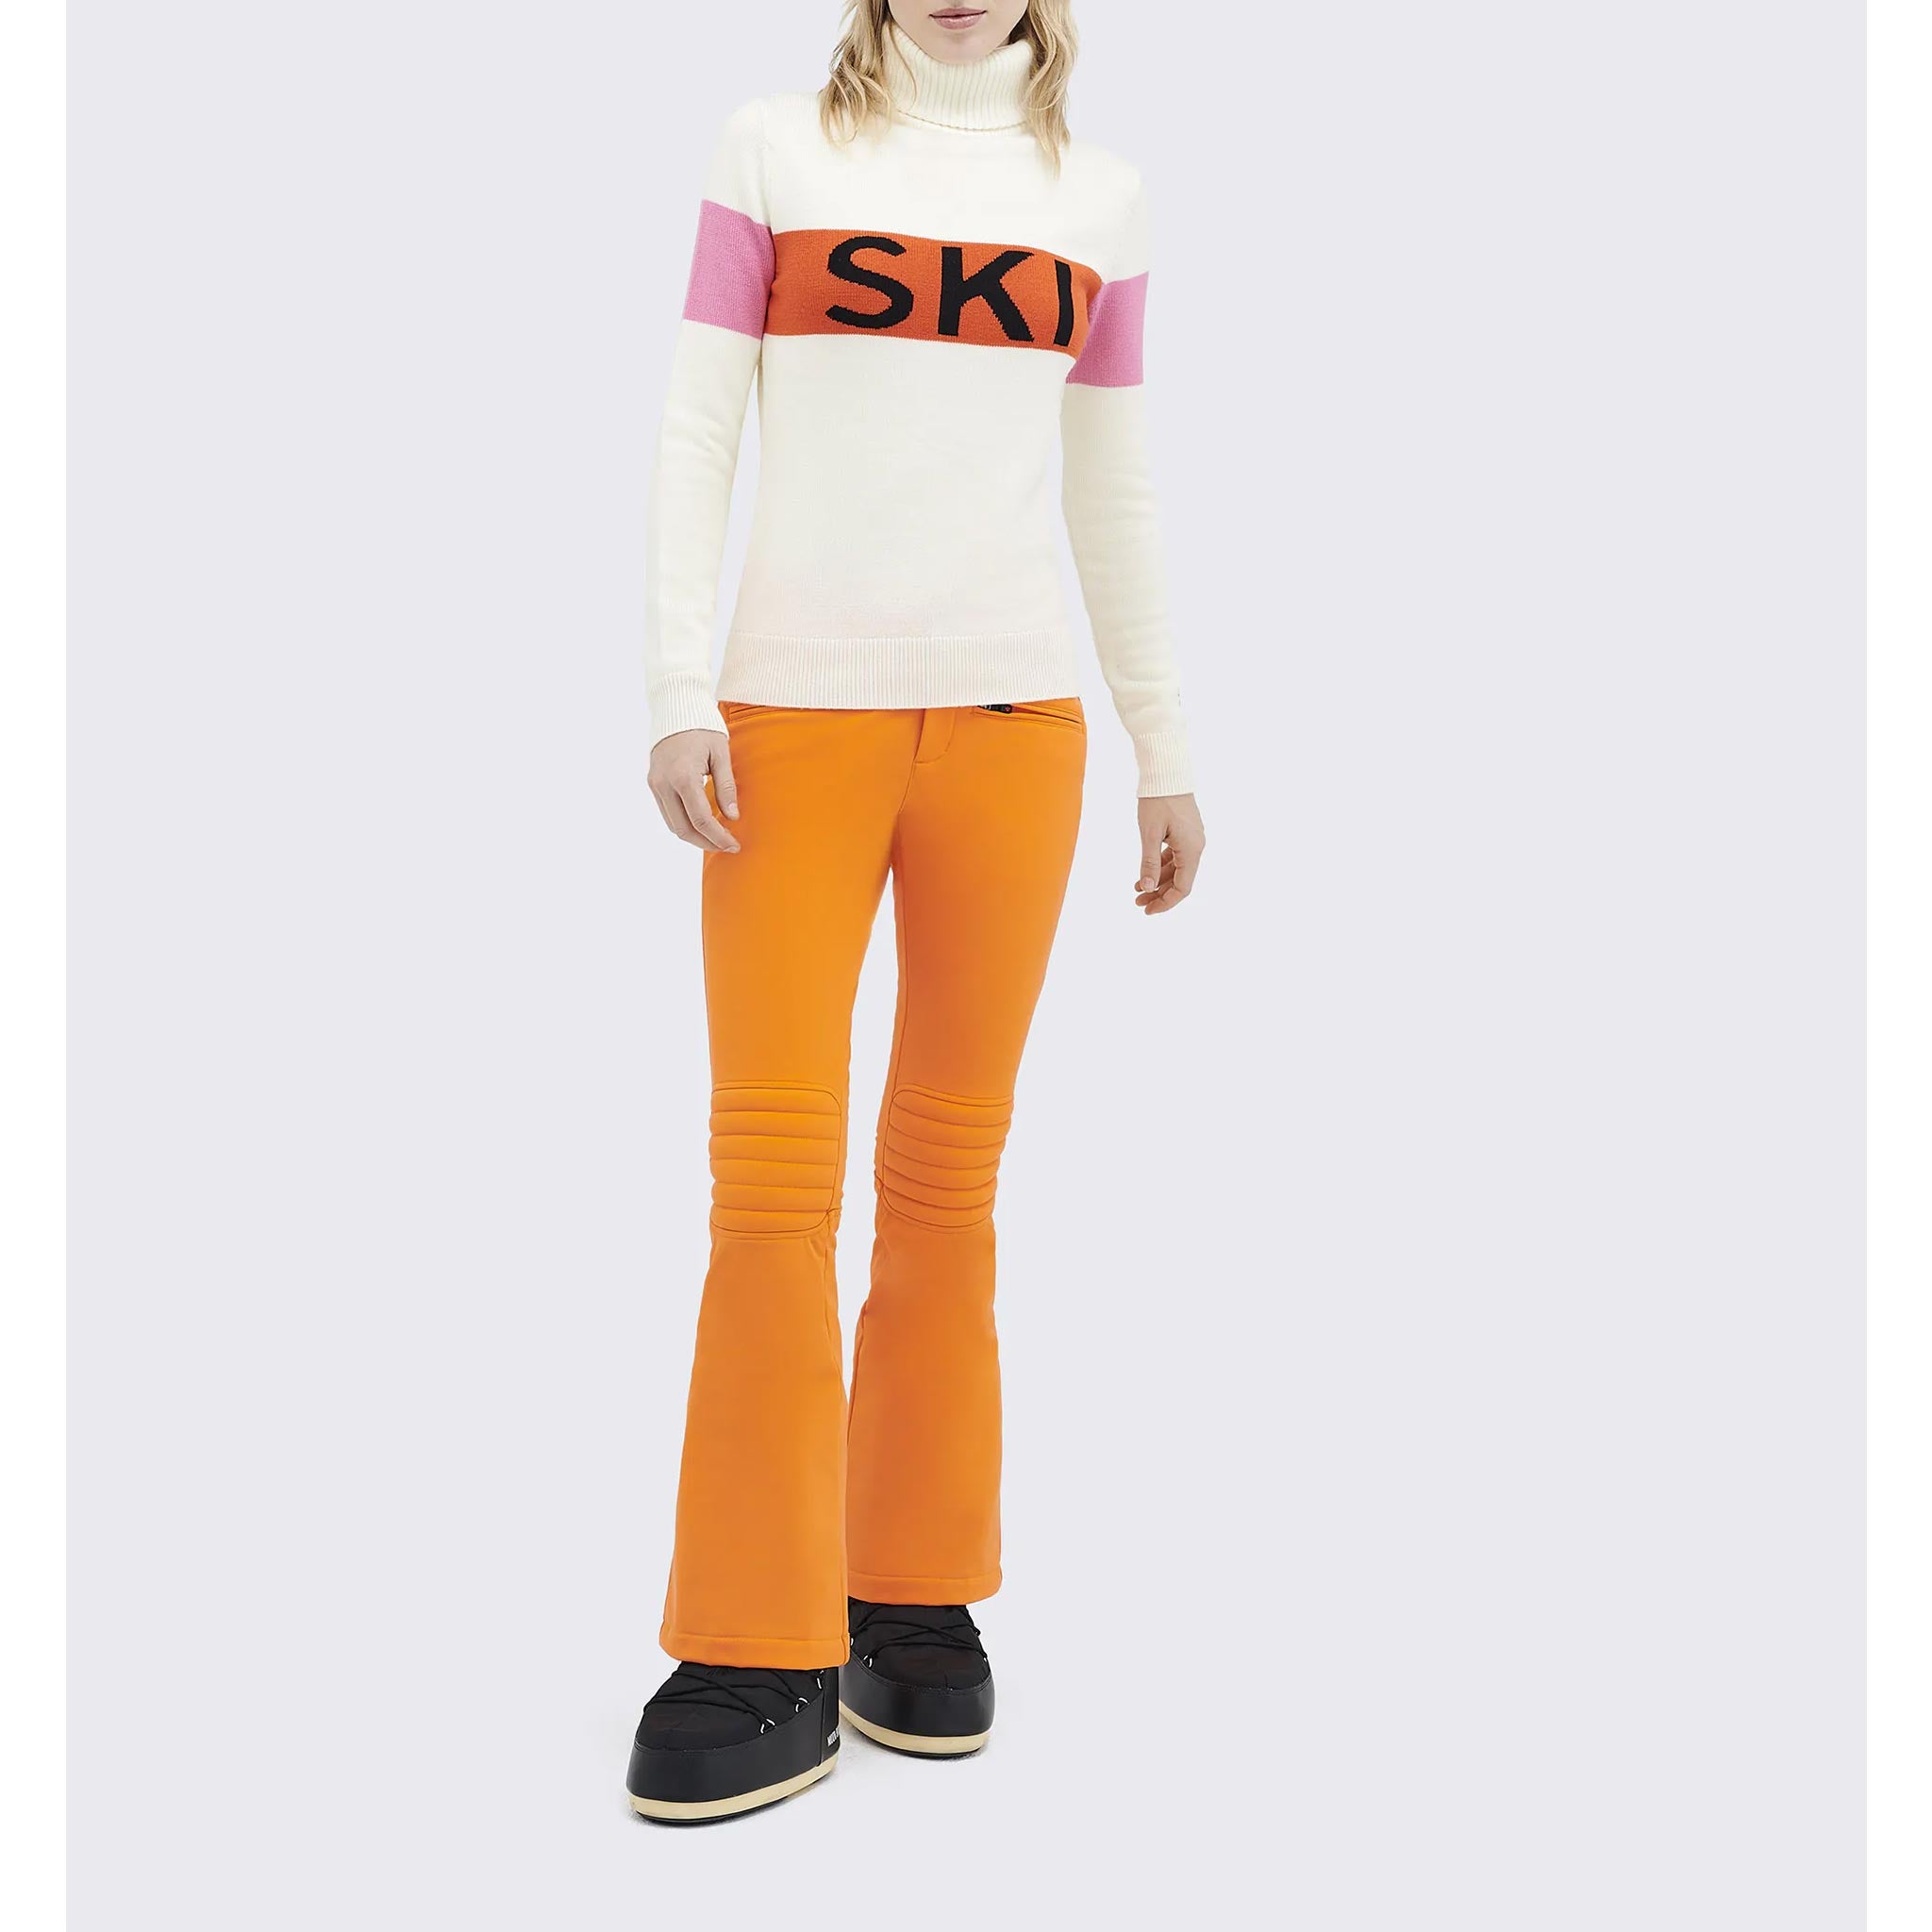 Ski II Sweater in Snow White/Orange Rainbow